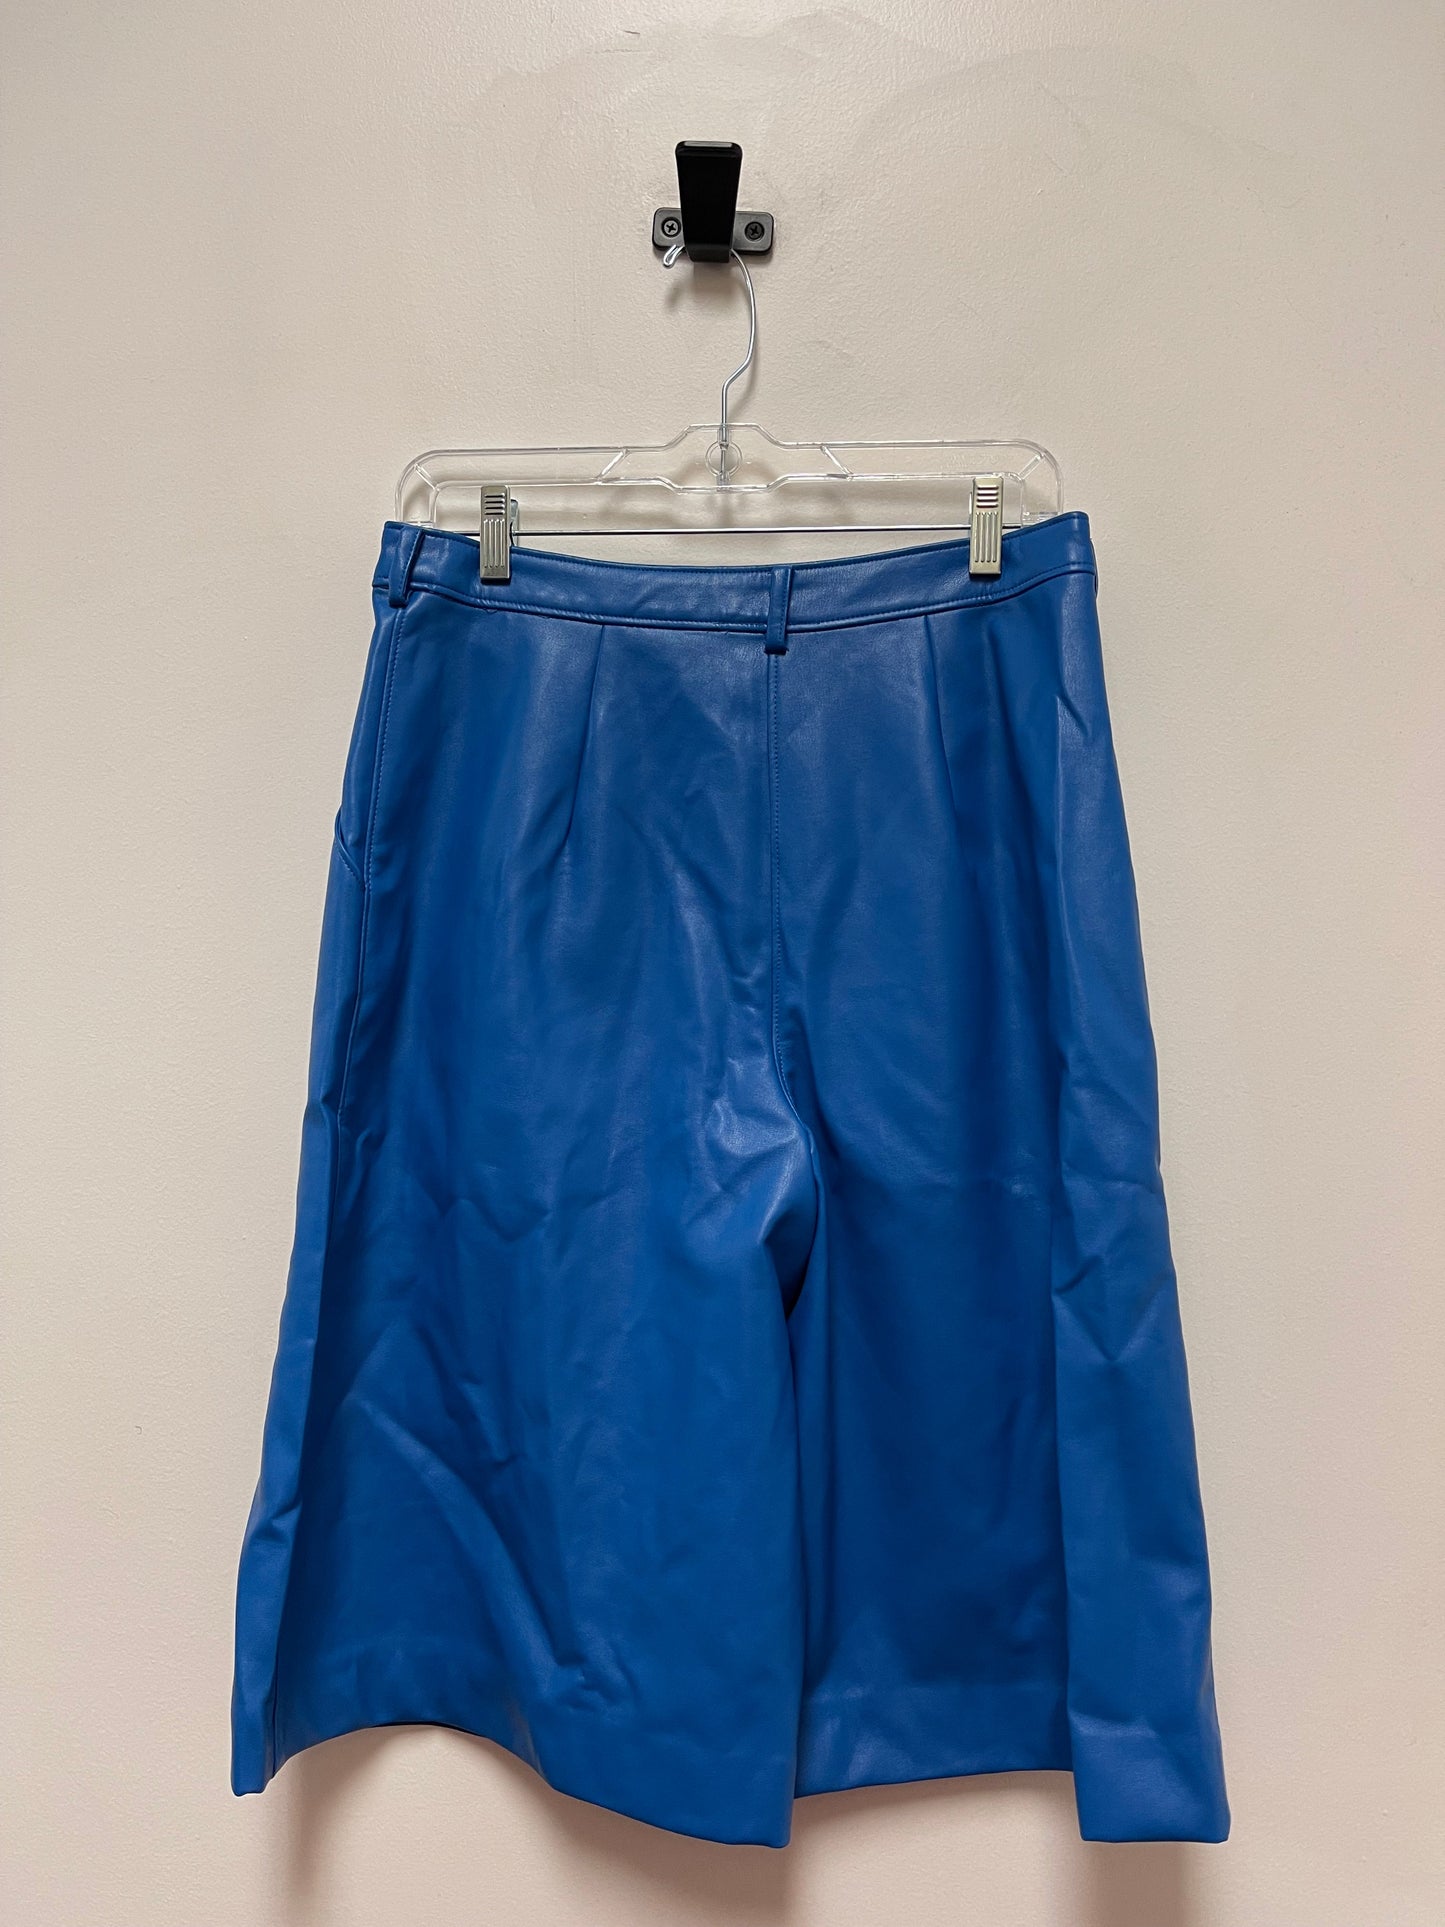 Blue Shorts Hutch, Size 4